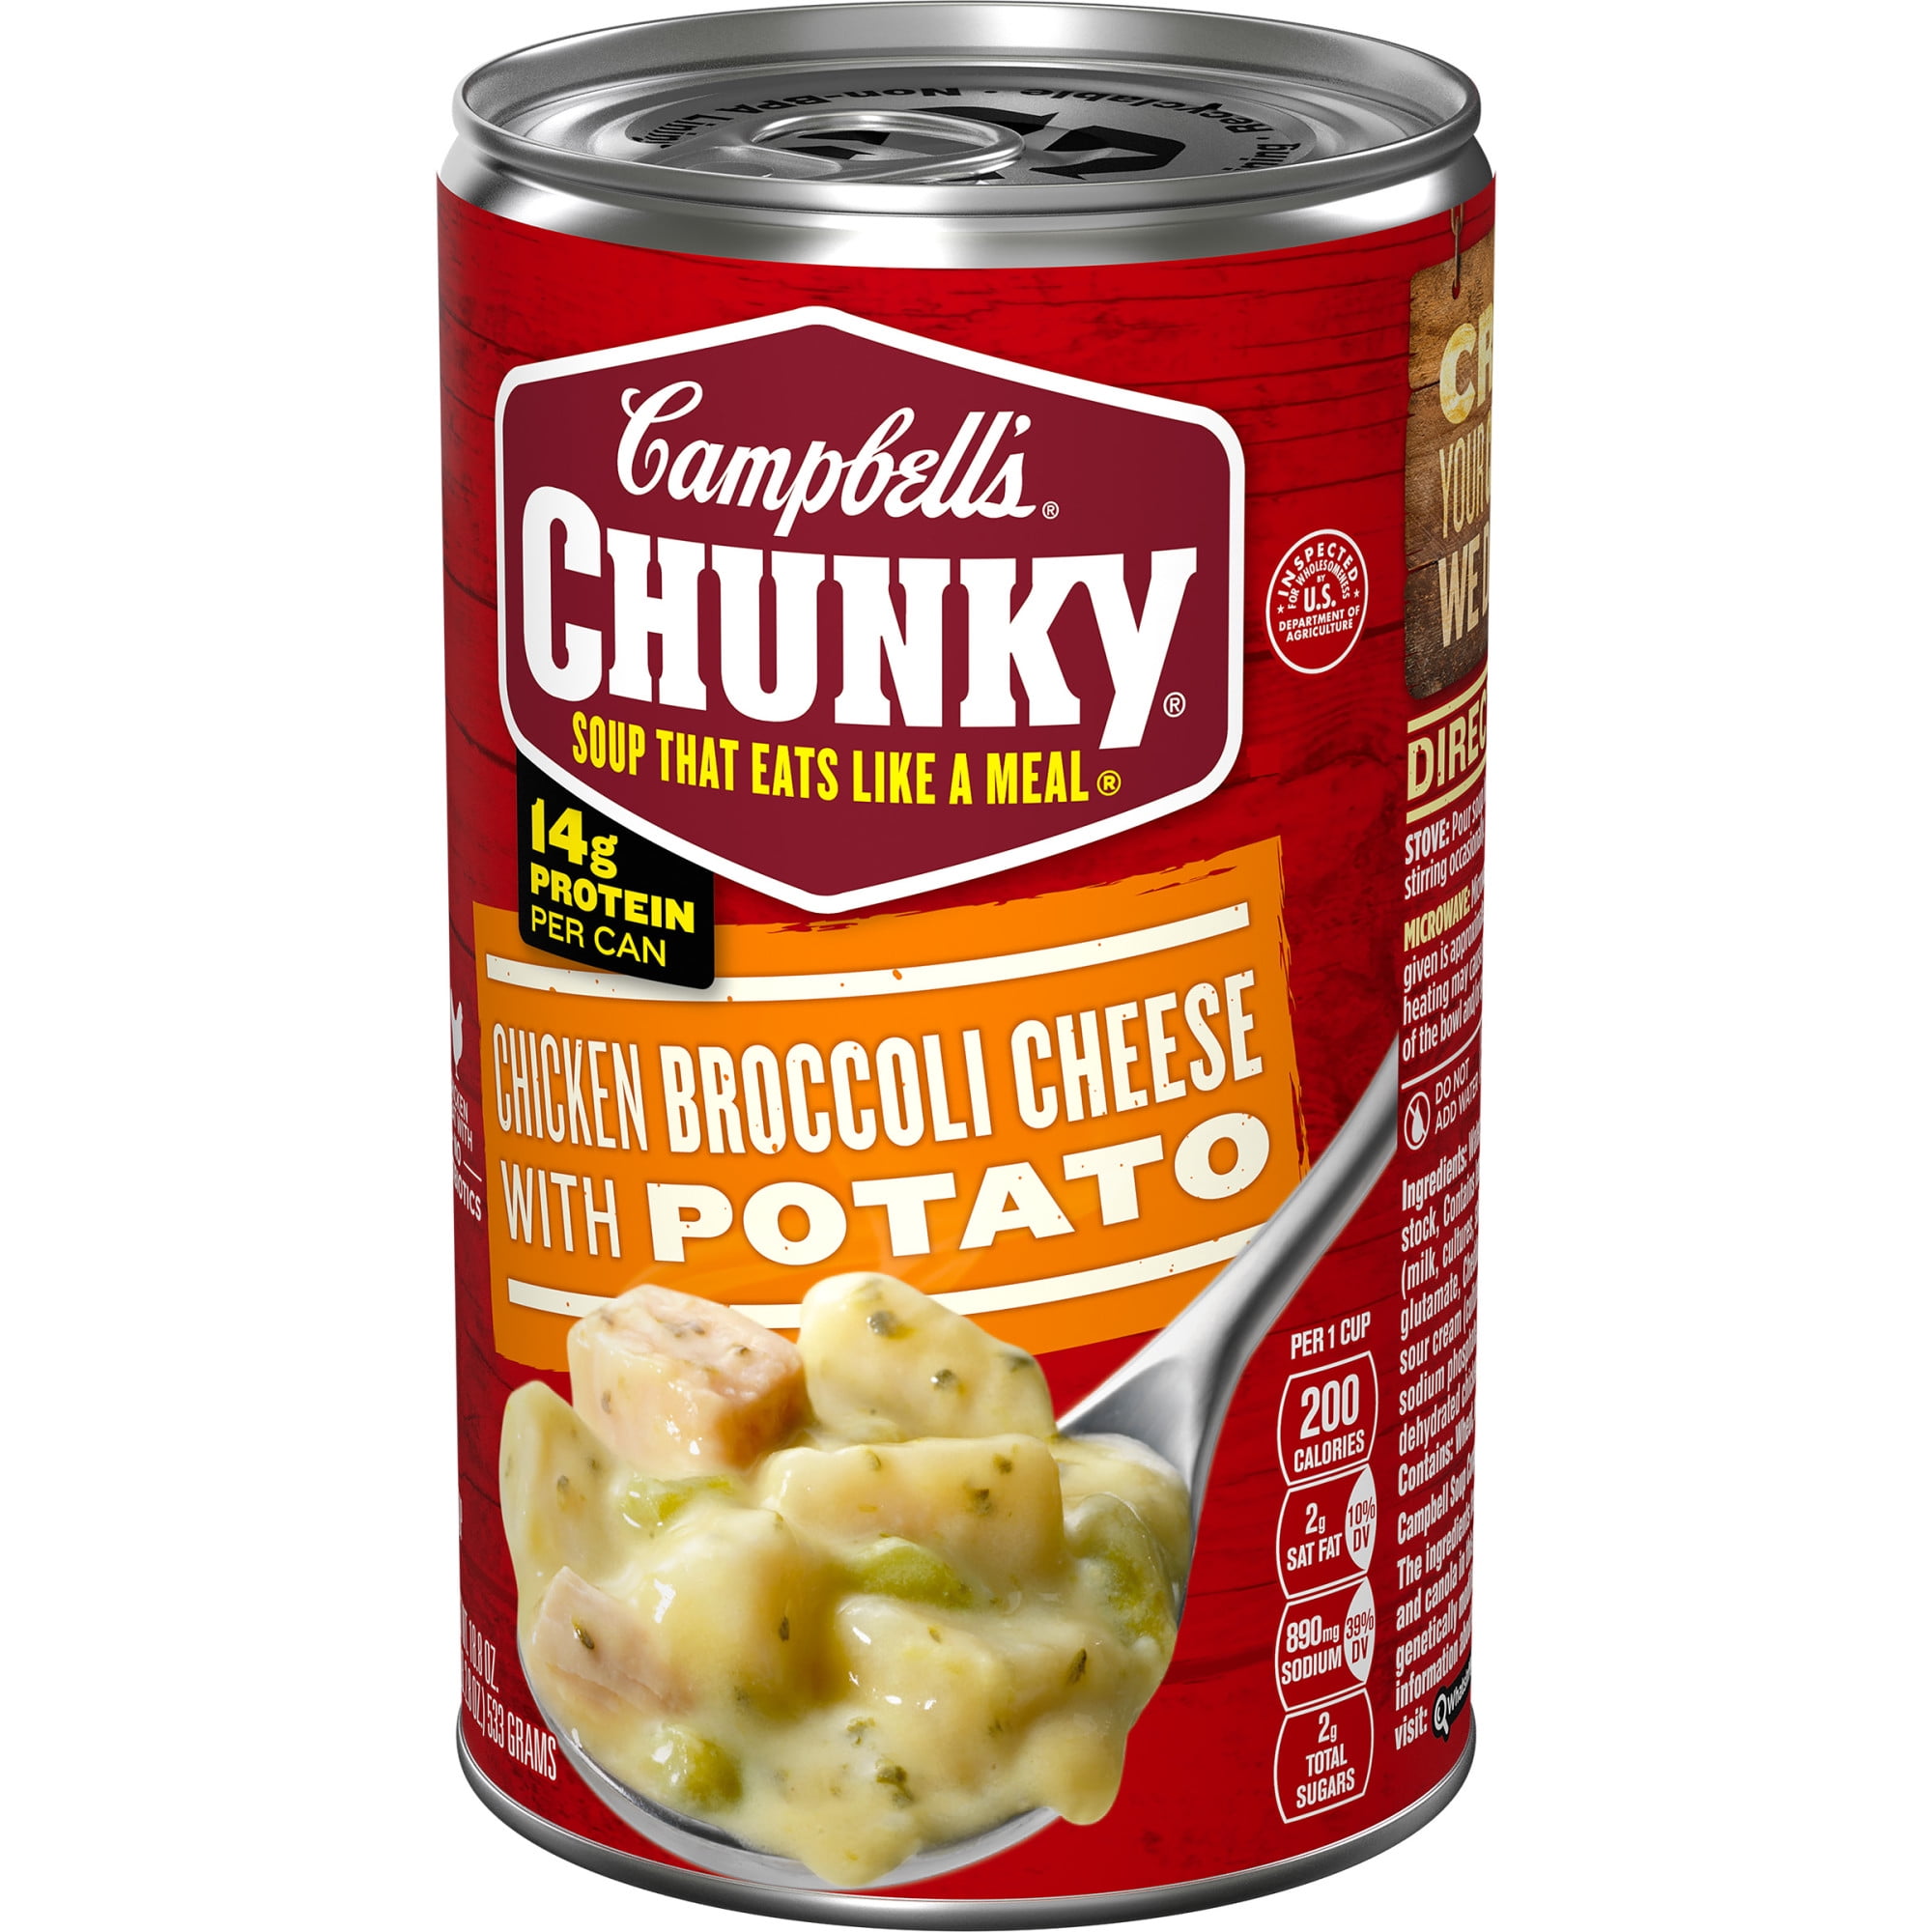 Campbell S Chunky Soup Chicken Broccoli Cheese With Potato Soup 18 8 Ounce Can Walmart Com Walmart Com